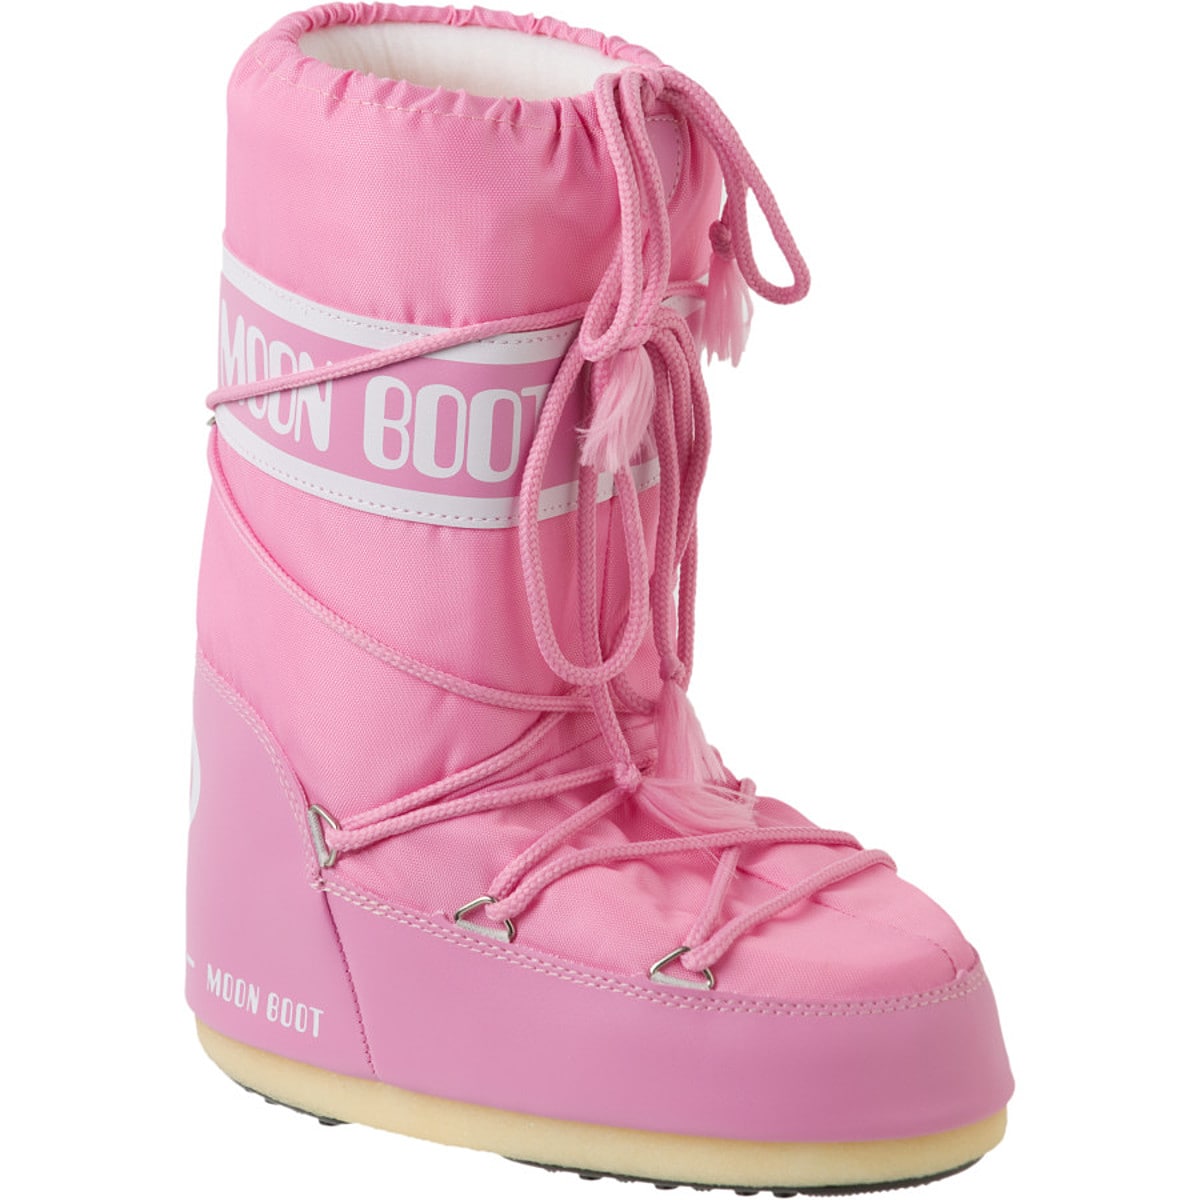 Tecnica Nylon Moon Boot - Kids' | eBay